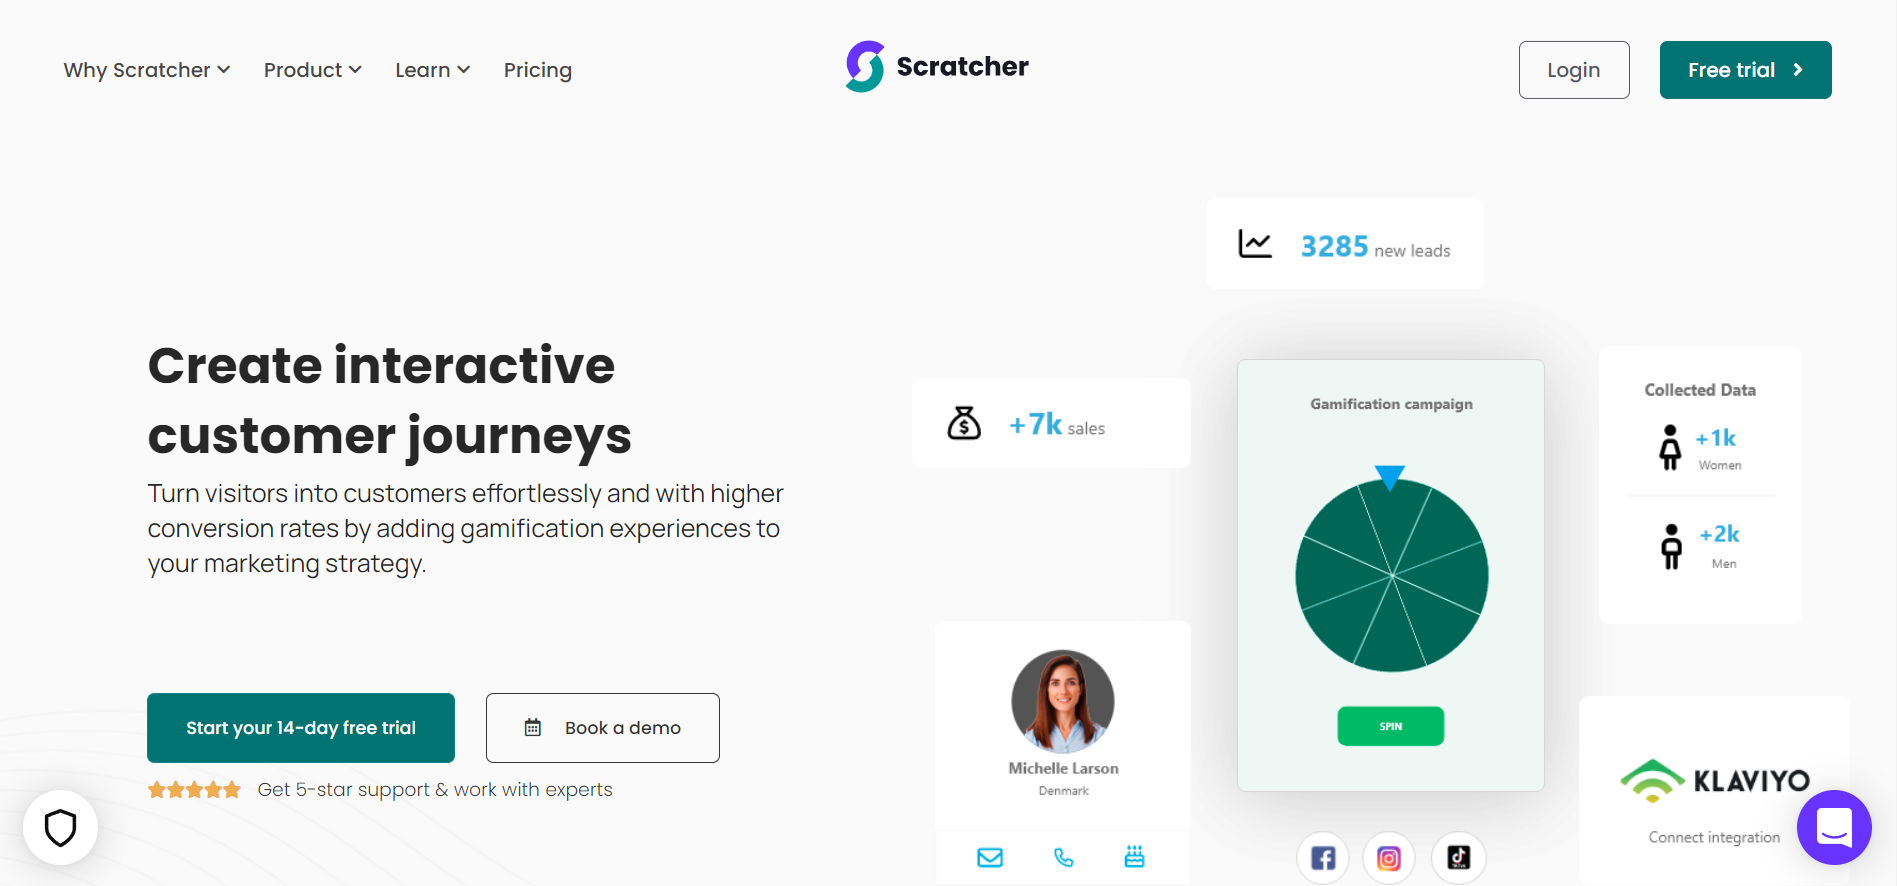 Create interactive customer journeys with Scratcher.